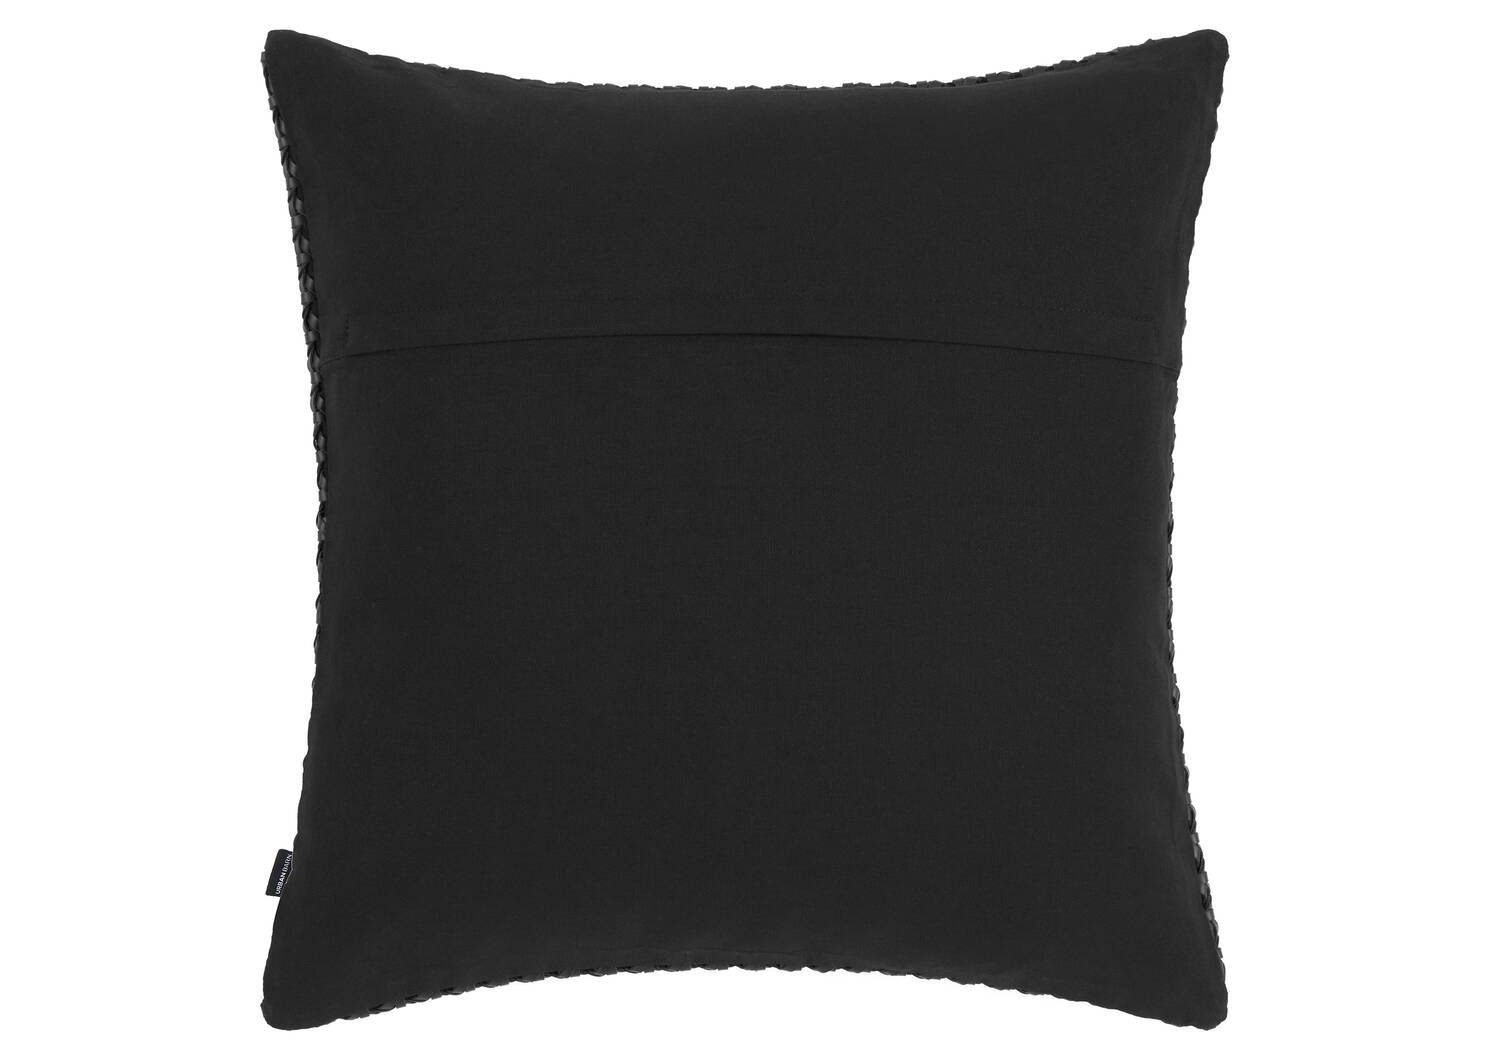 Tommy X UB Pillow Black 20"x20"